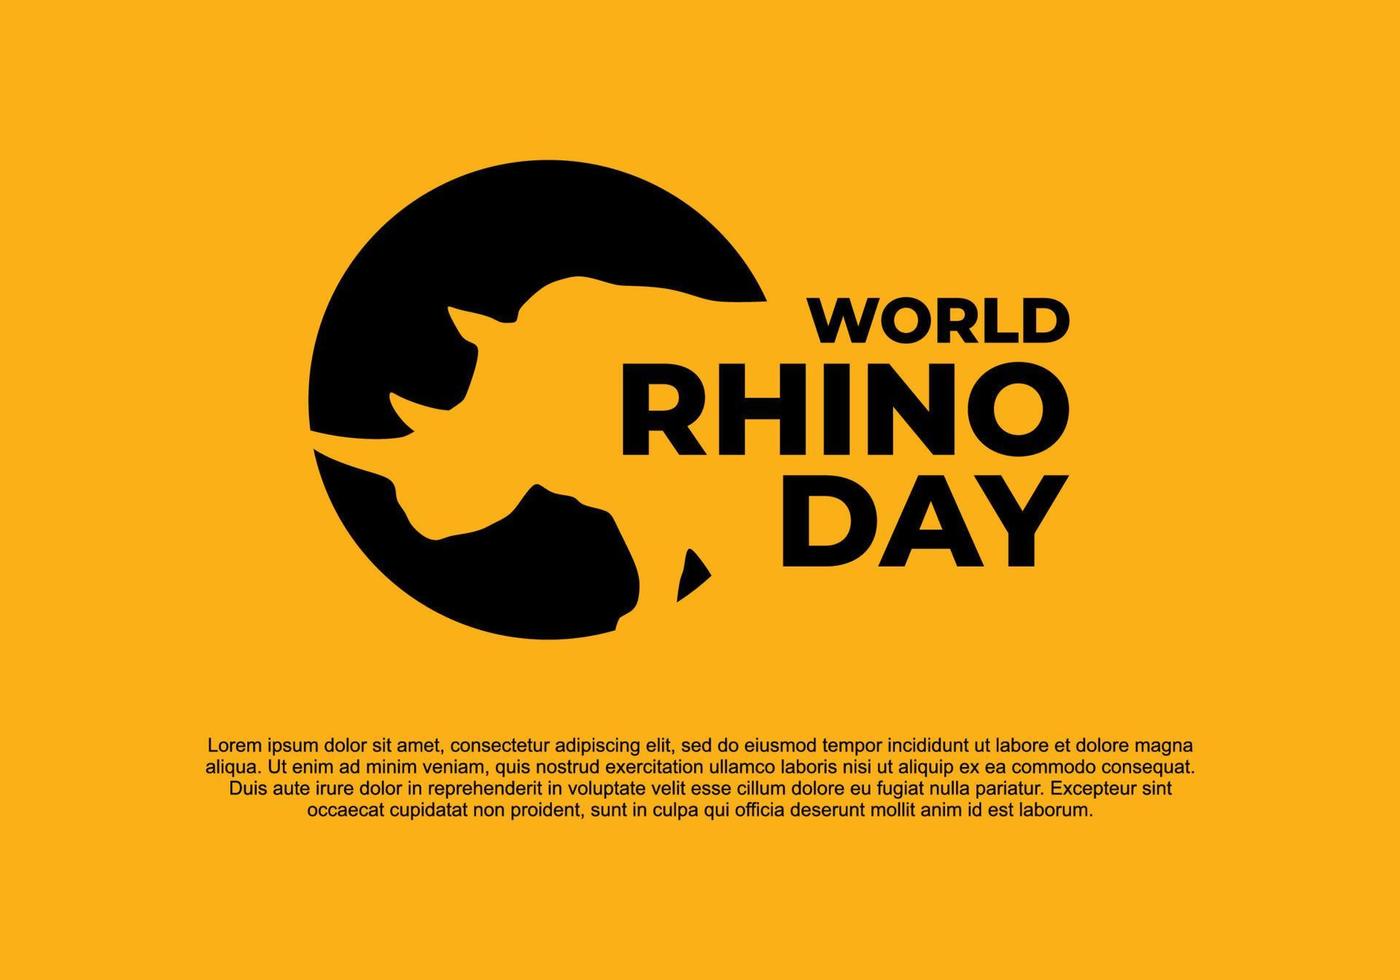 World rhino day background with rhino head symbol on september 22. vector